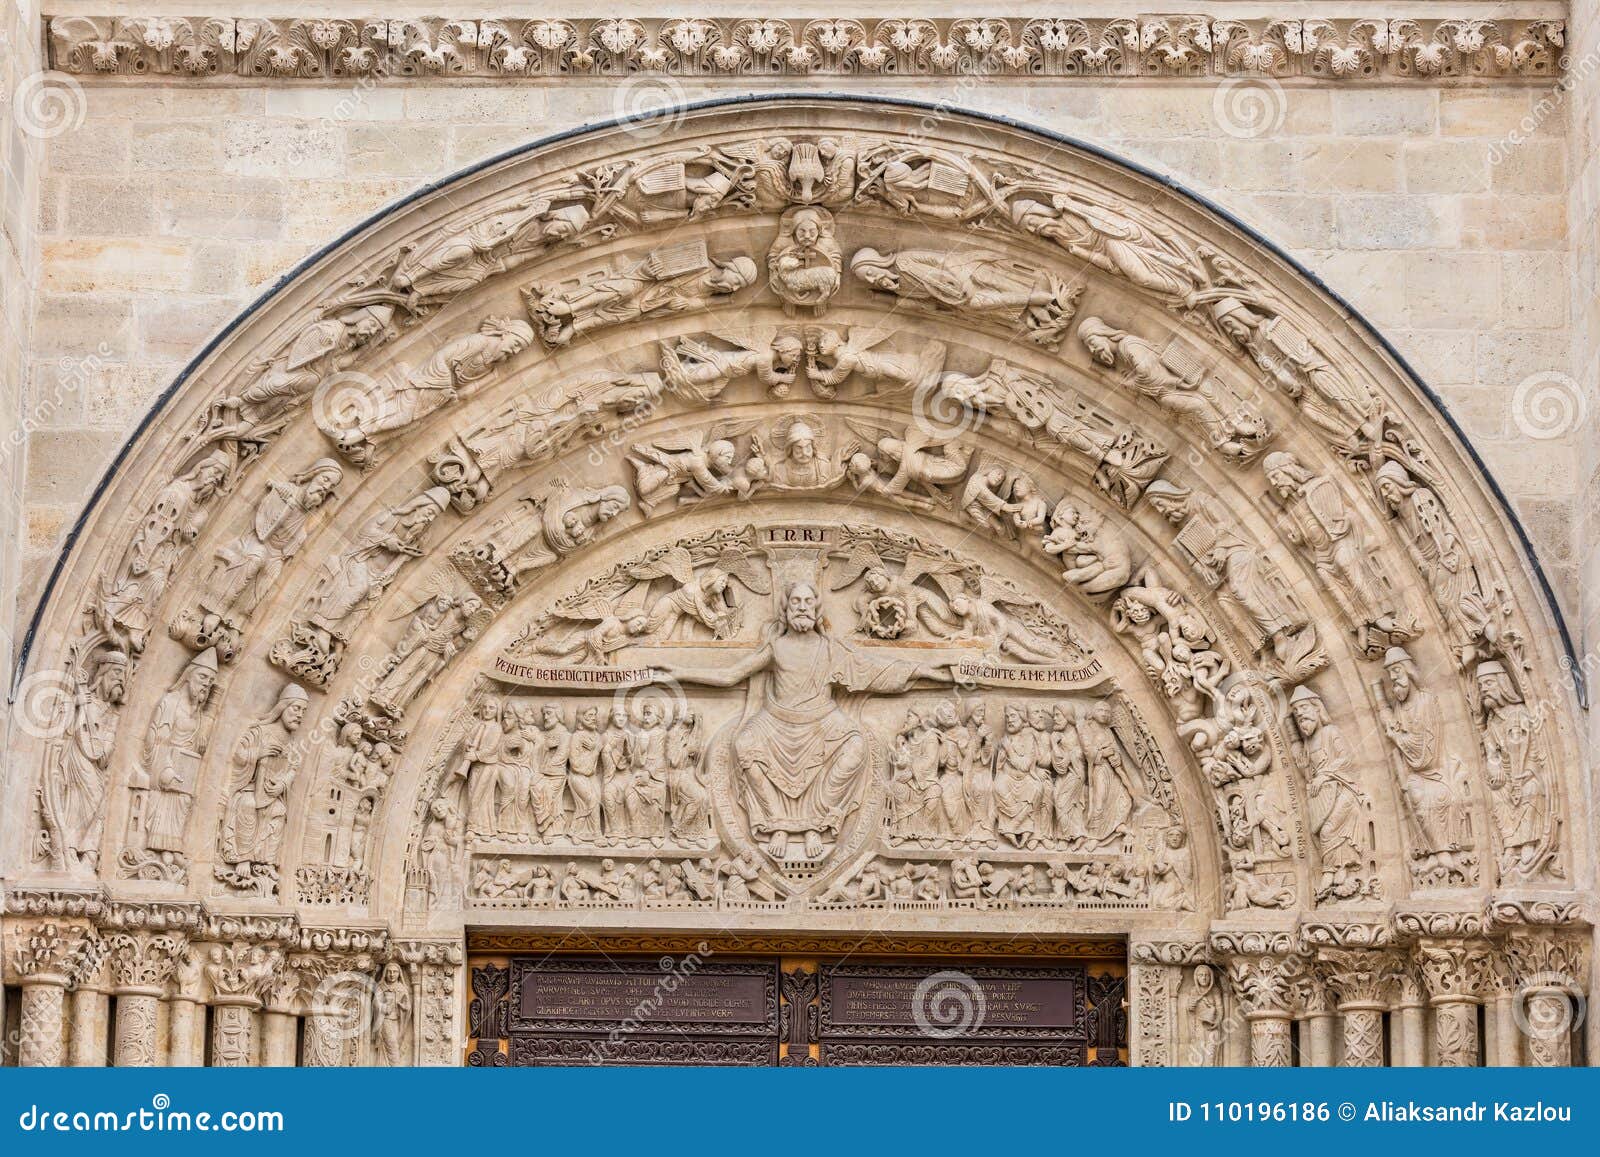 Basilica of Saint Denis: Architectural Details. Paris, France Stock Photo -  Image of catholicism, abbey: 110196186